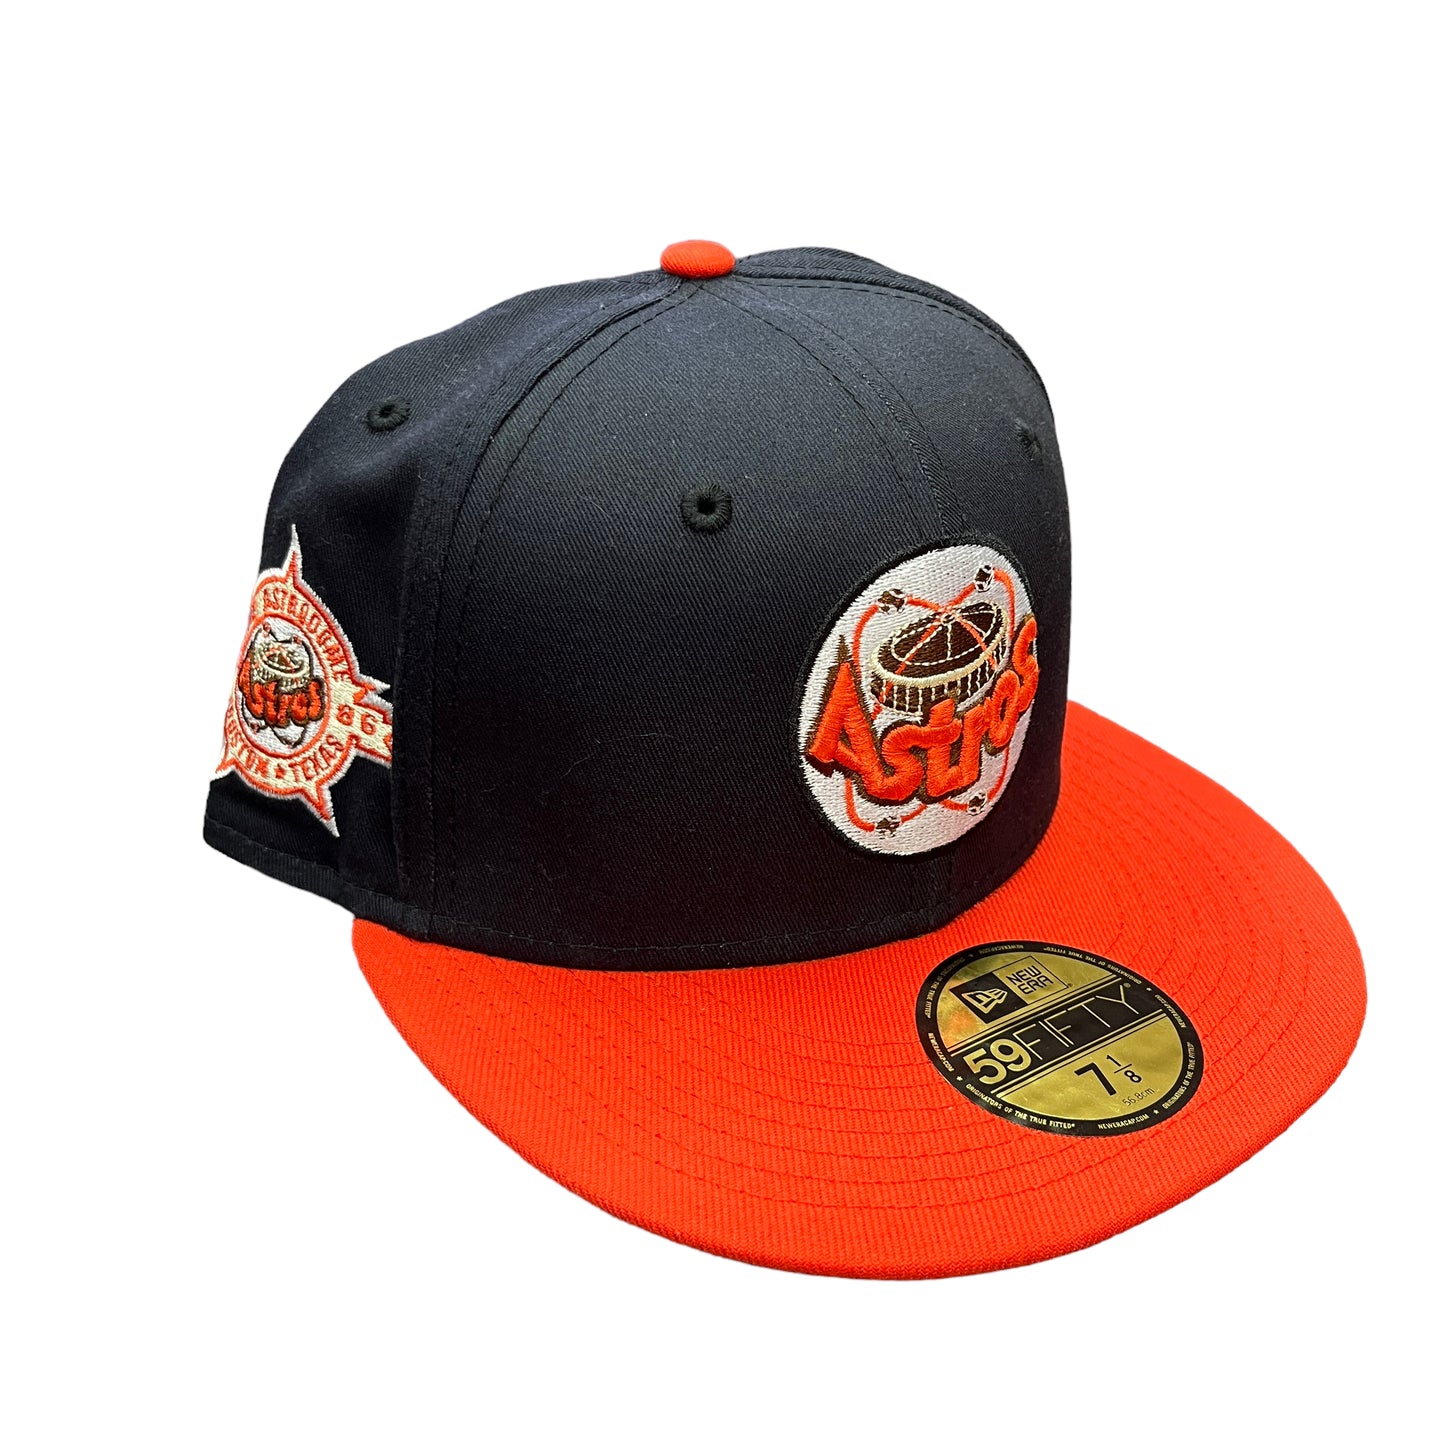 Astros Navy/Orange Hat